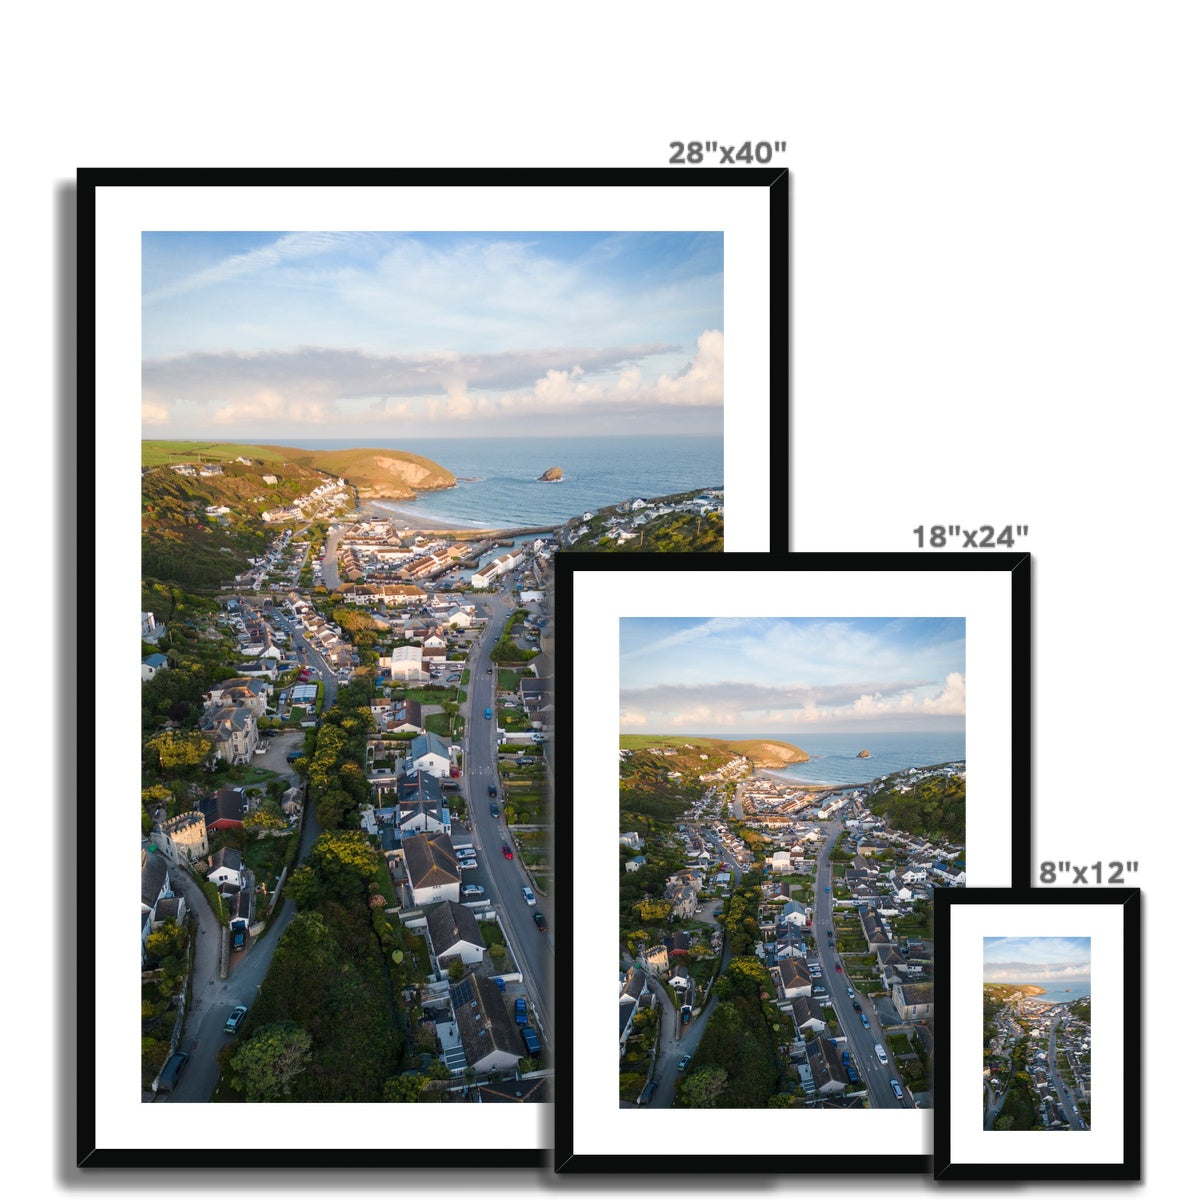 Portreath Village Sunrise Light ~ Framed & Mounted Print